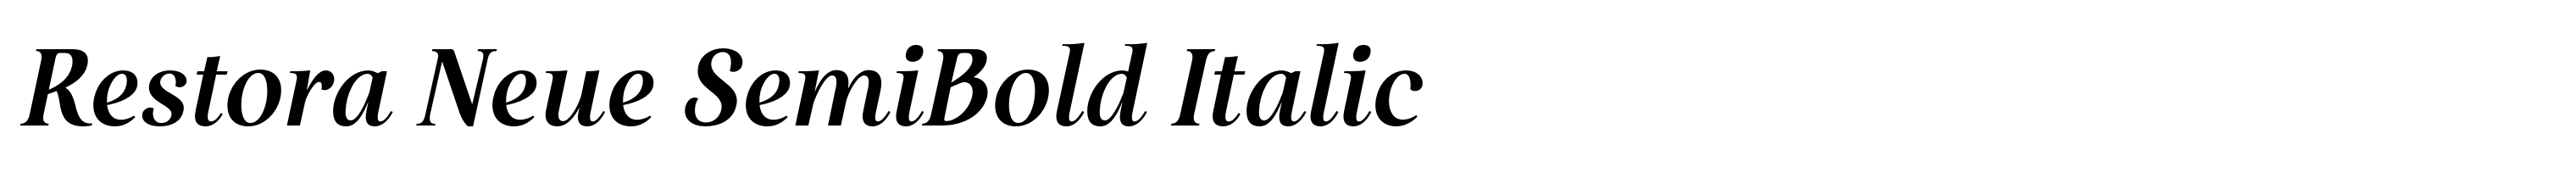 Restora Neue SemiBold Italic